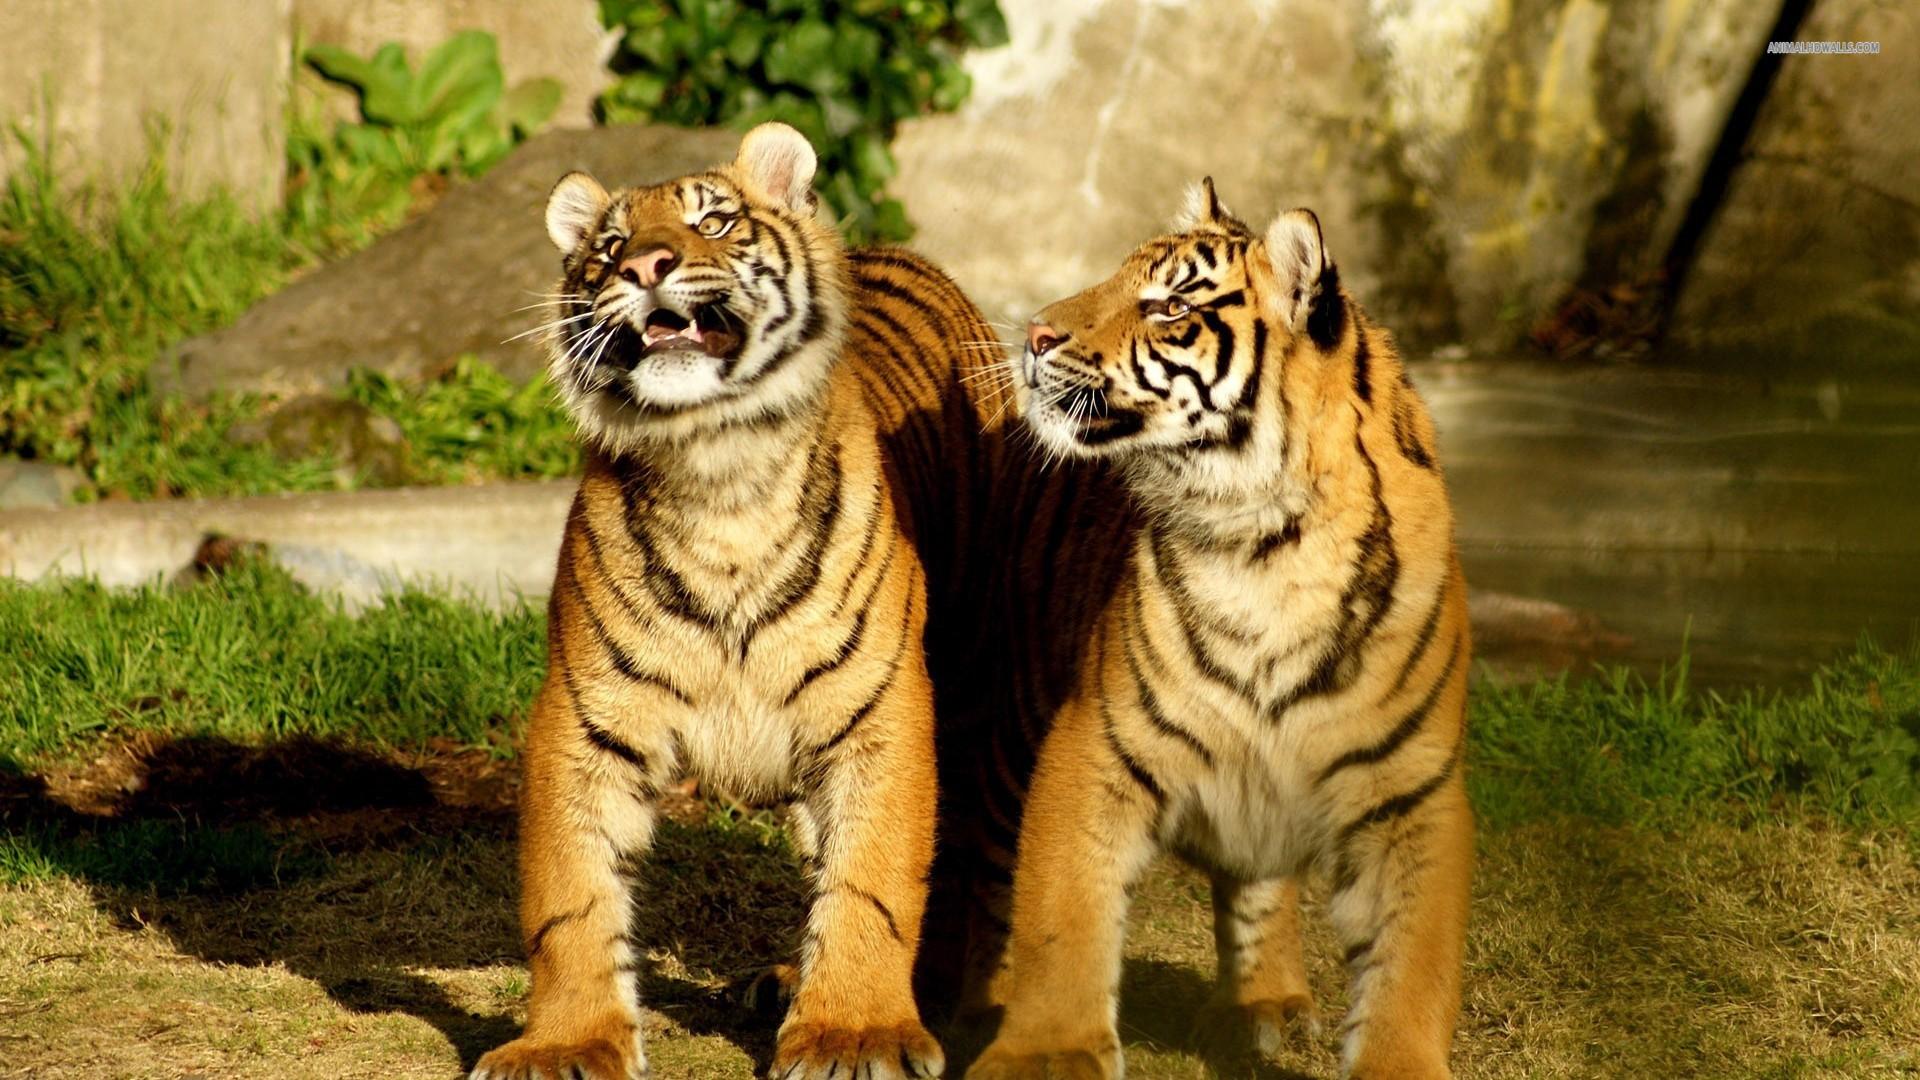 Tigers, animals desktop PC and Mac wallpaper